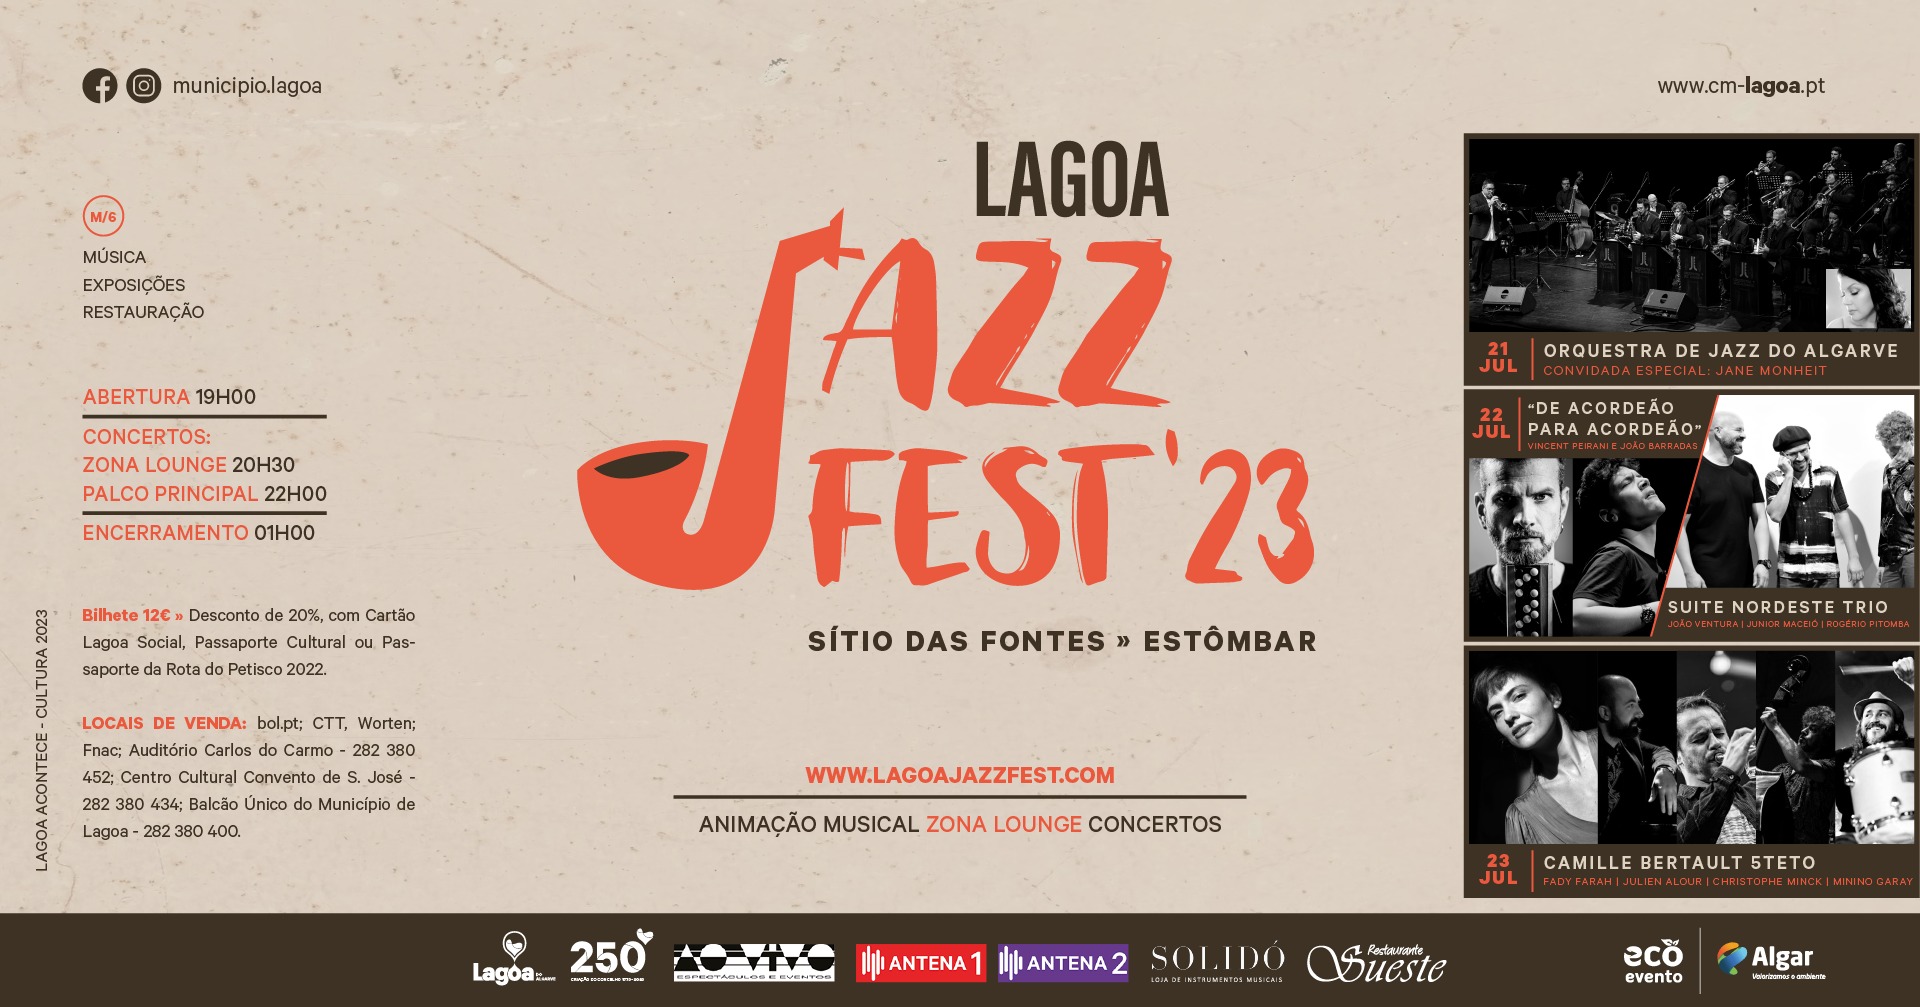 Lagoa Jazz Fest'23